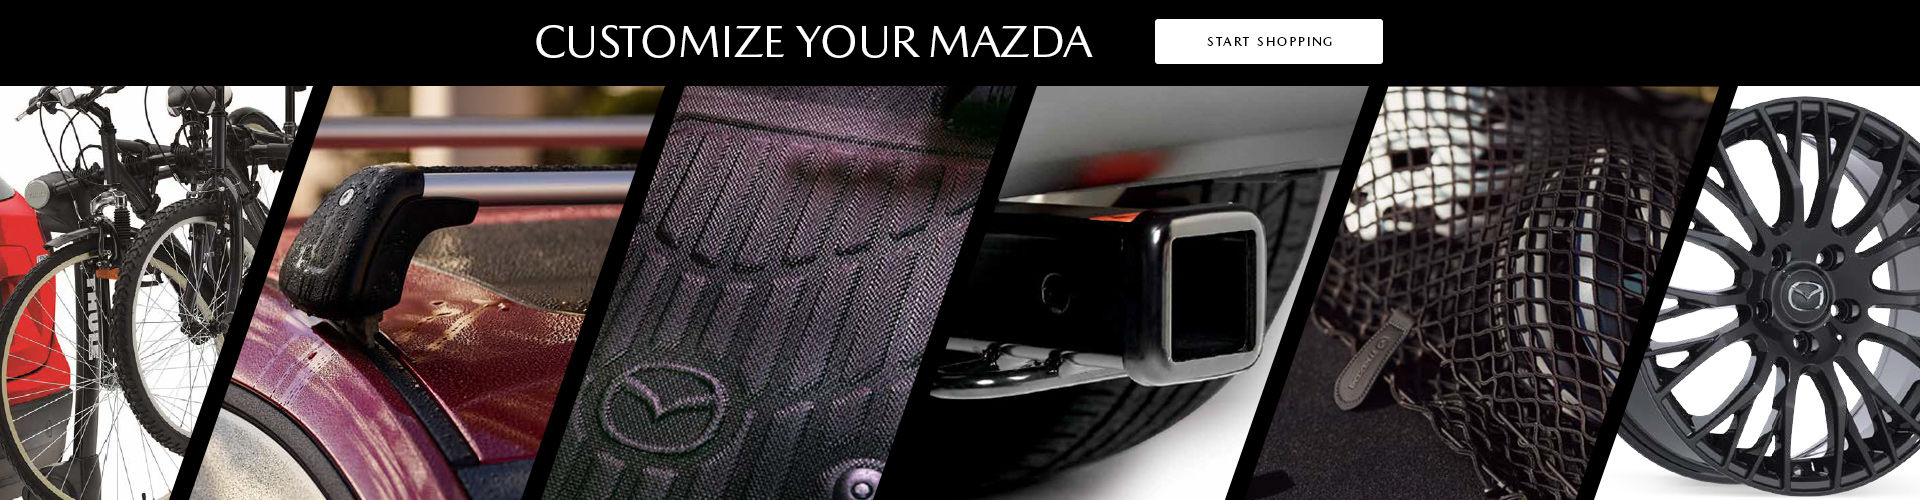 Customize Your Mazda (Header)